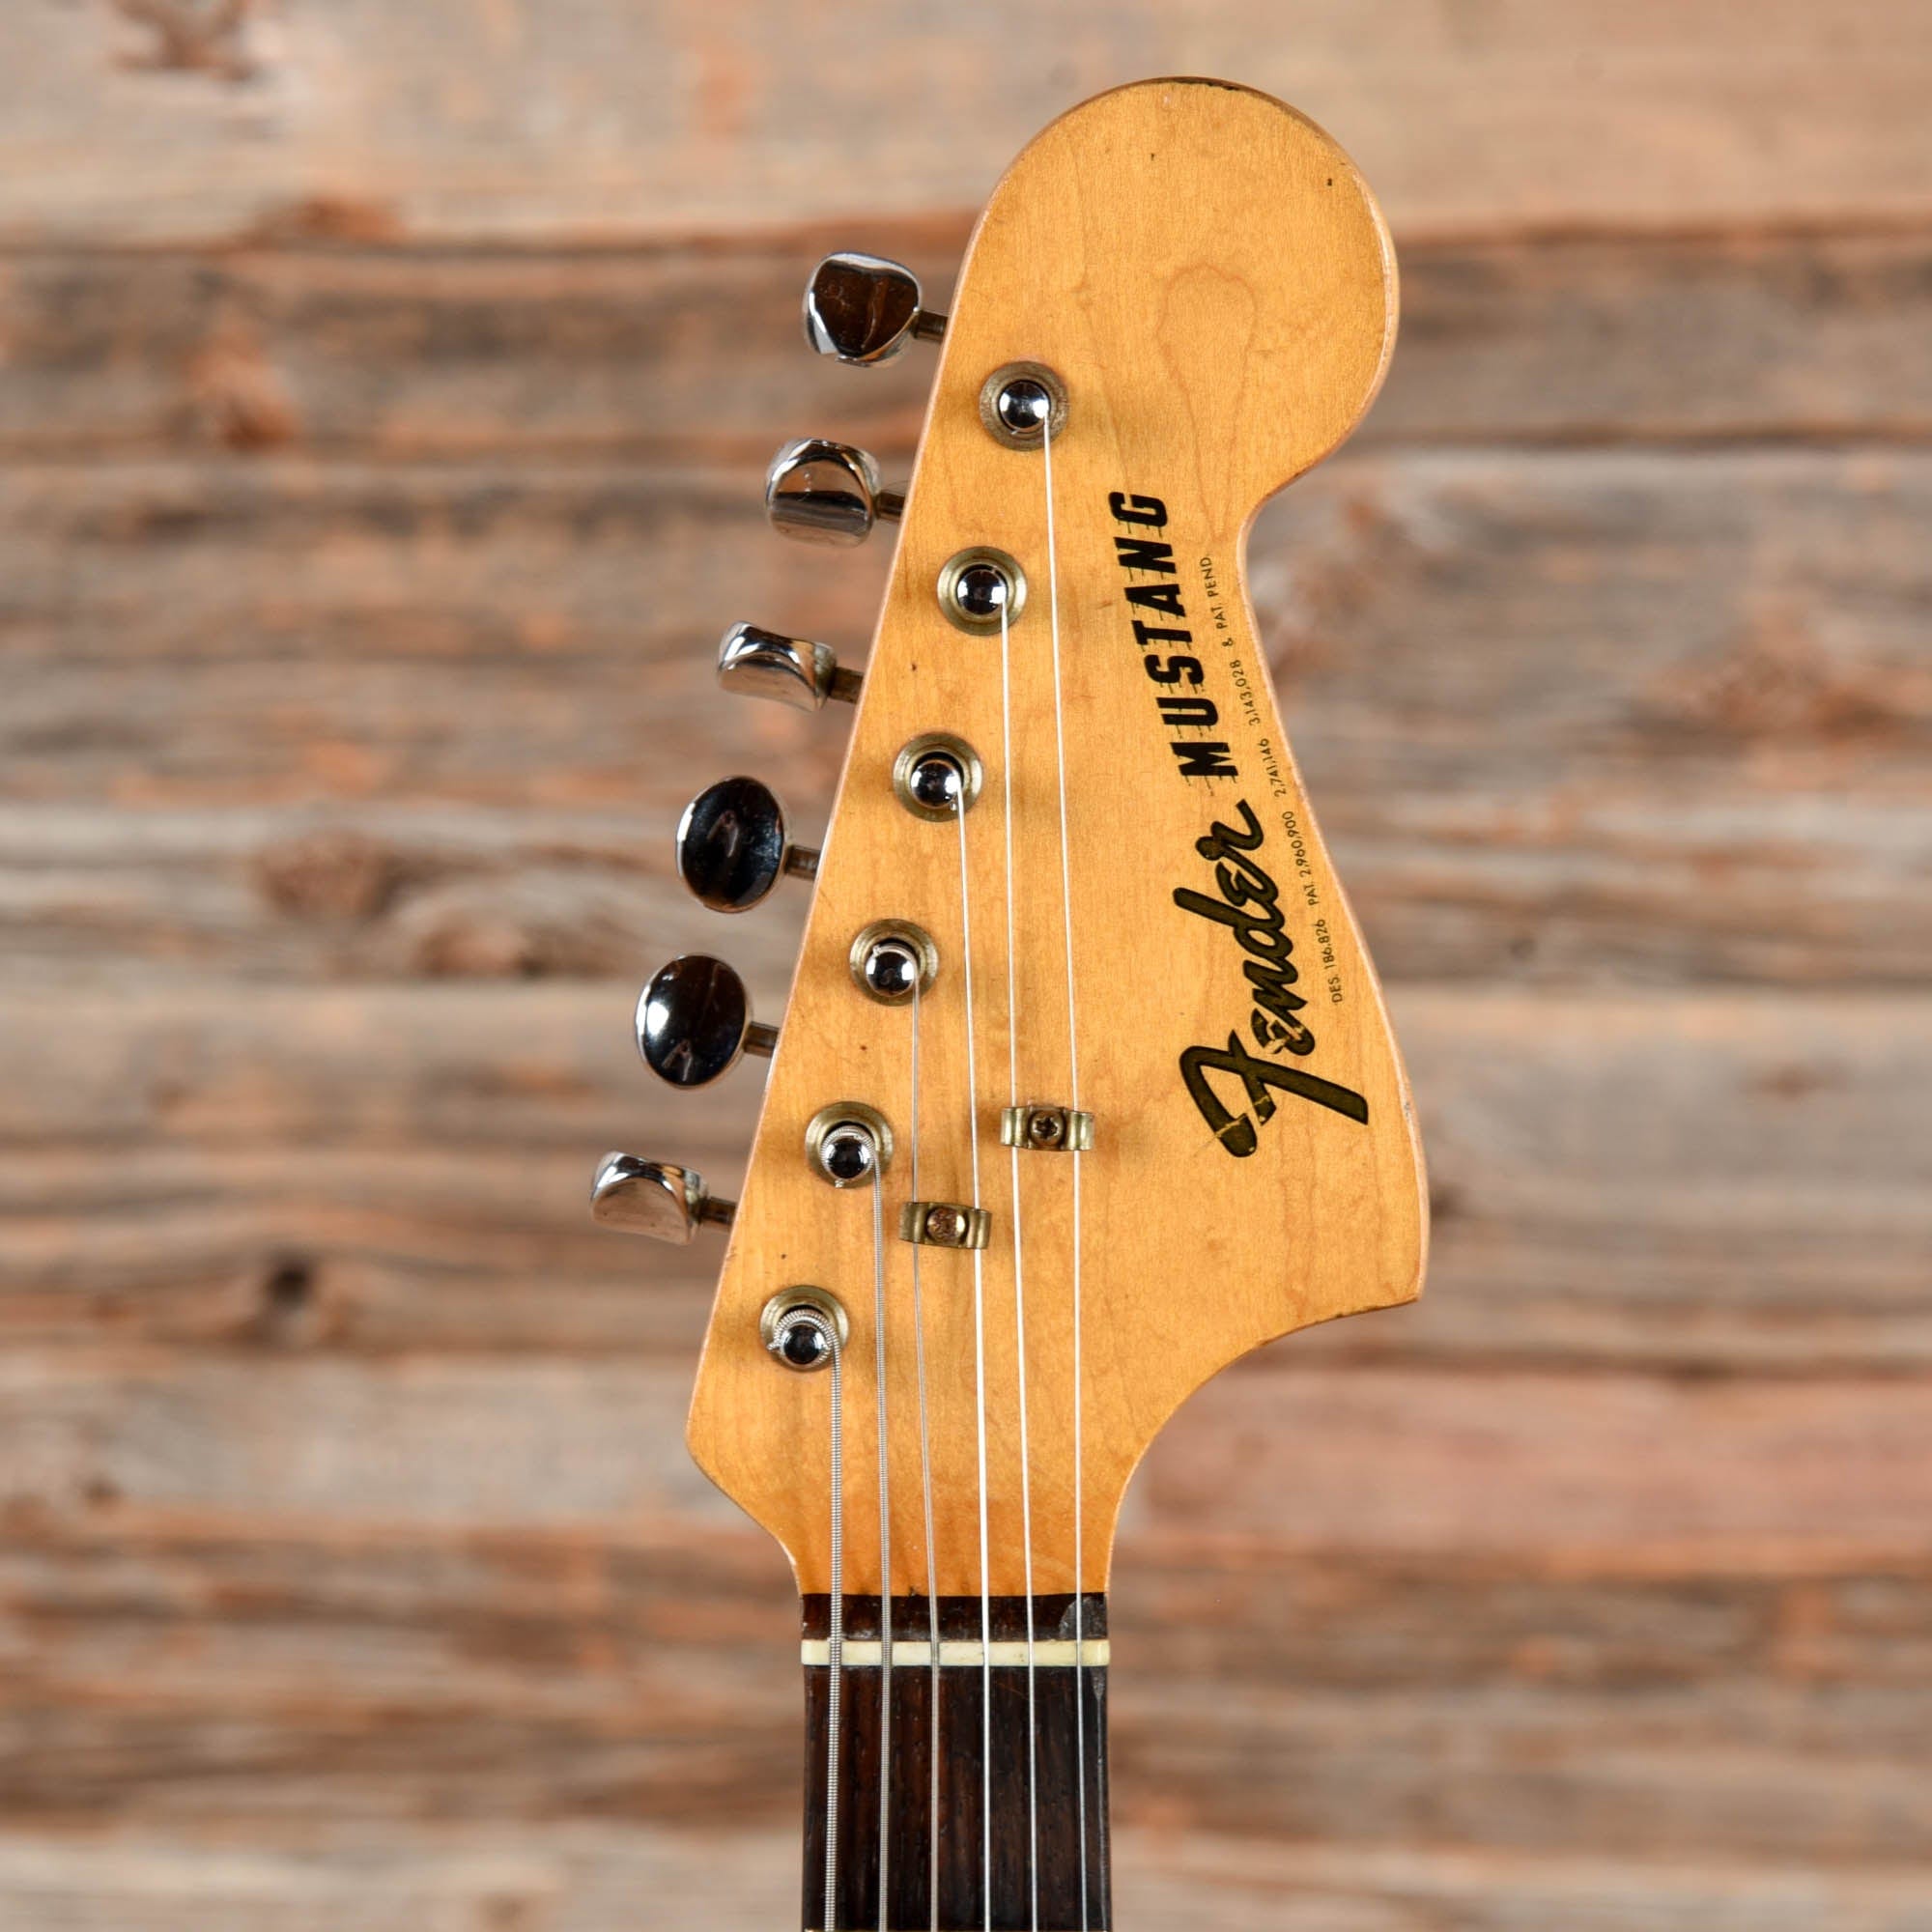 Fender Mustang Natural Refin 1964 Chicago Music Exchange